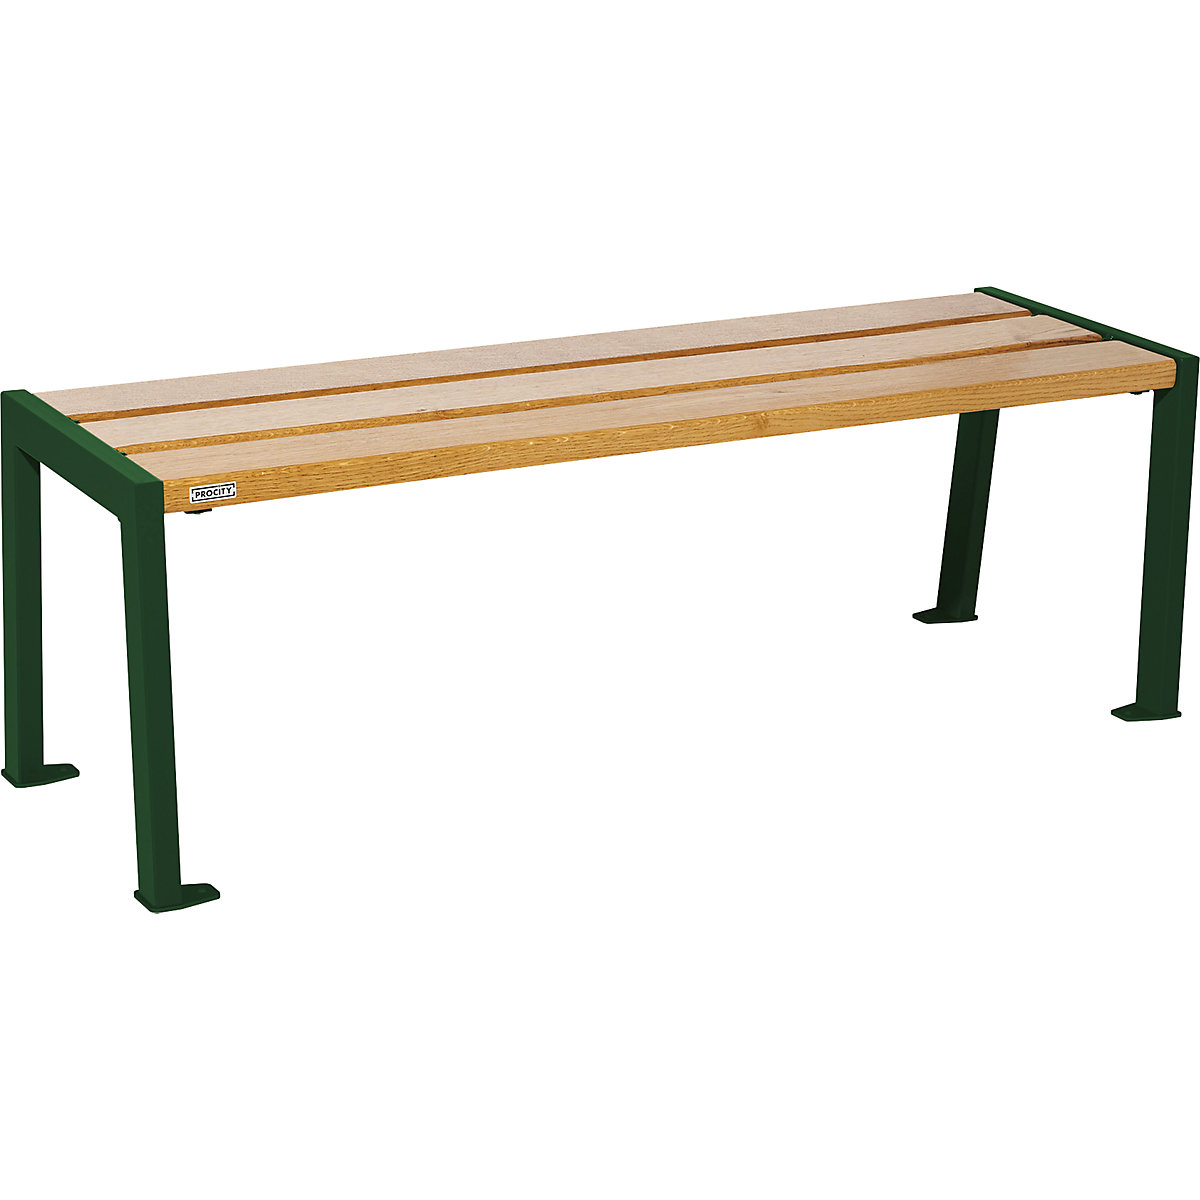 SILAOS® wooden bench without back rest – PROCITY, height 437 mm, length 1200 mm, moss green, light oak finish-4